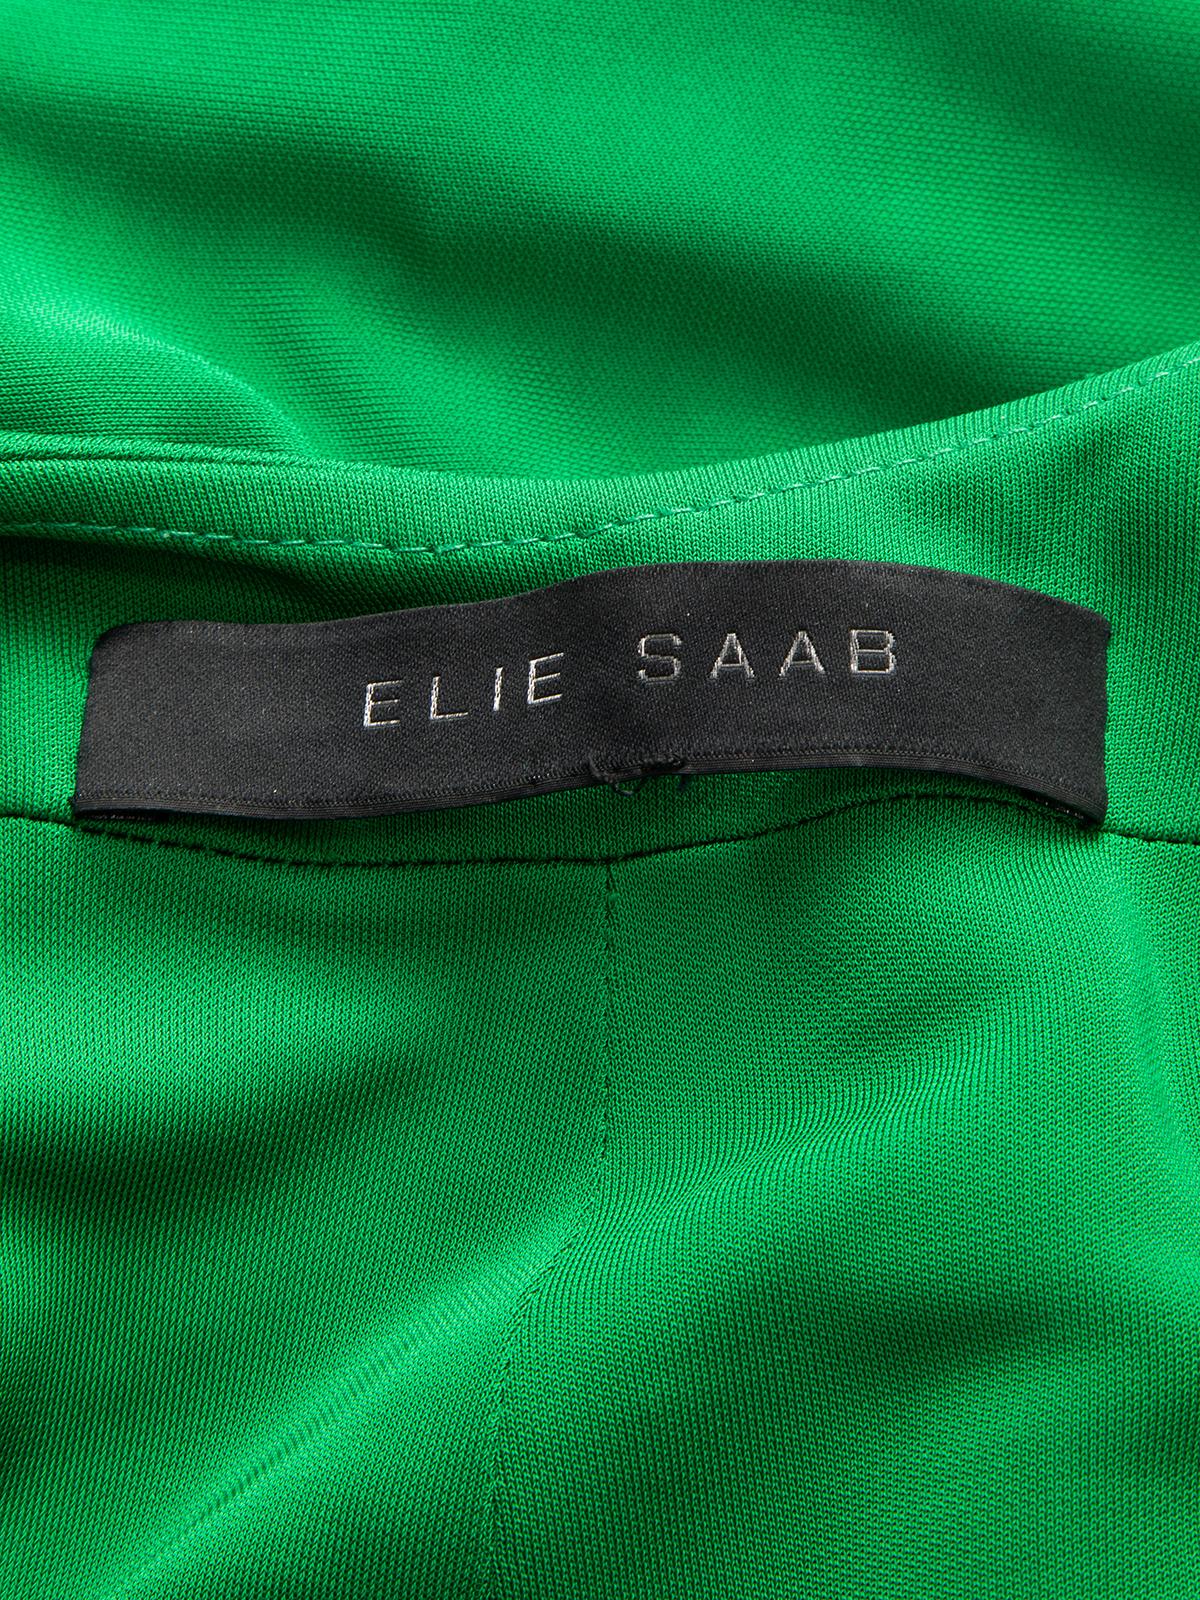 Elie Saab Women's One Shoulder Gown 2